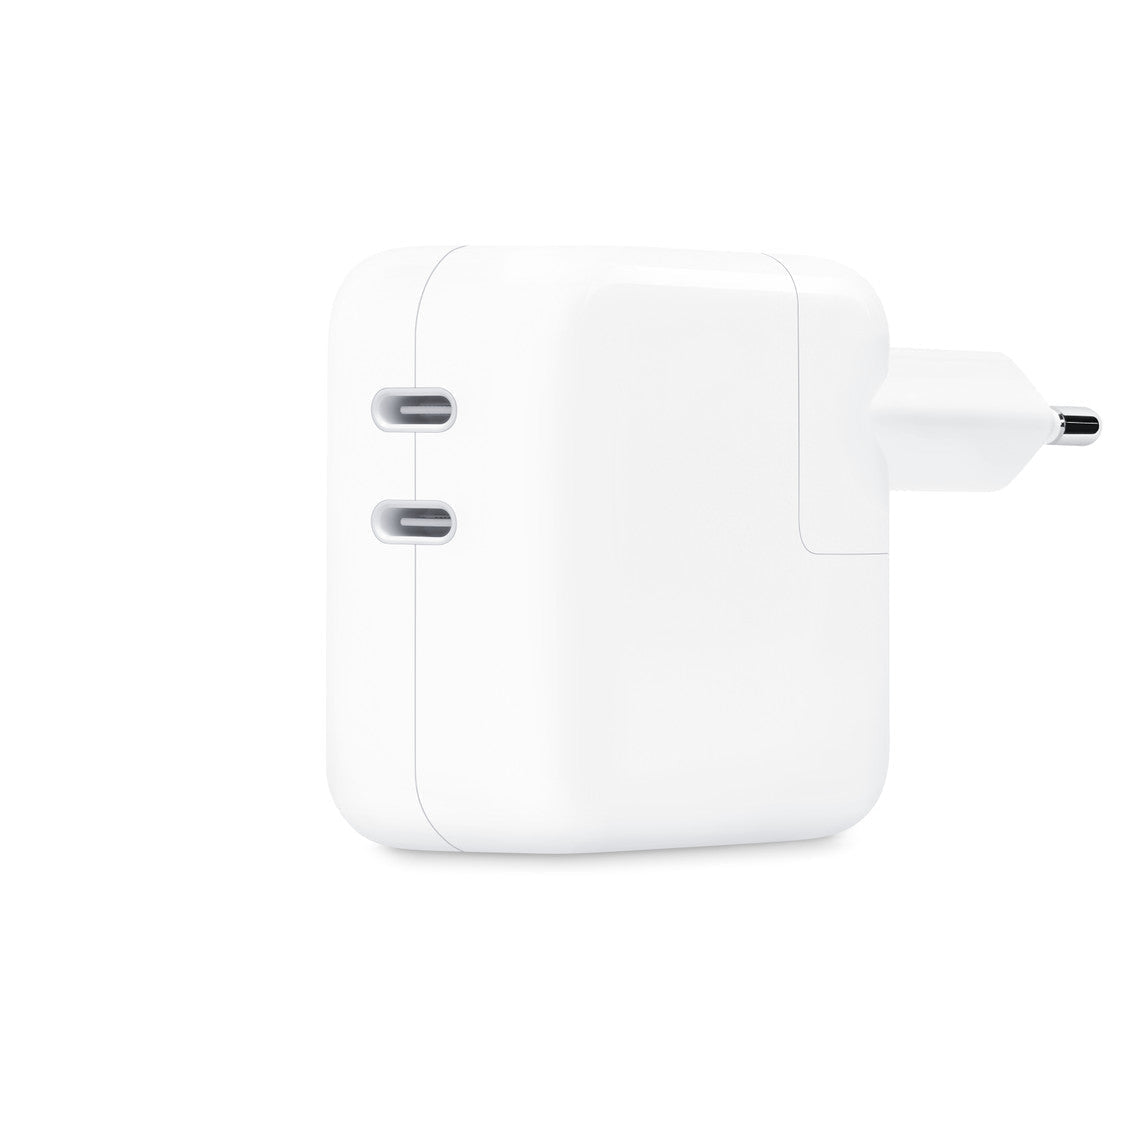 Apple POWER ADAPTER : 35W DUAL USB-C PORT